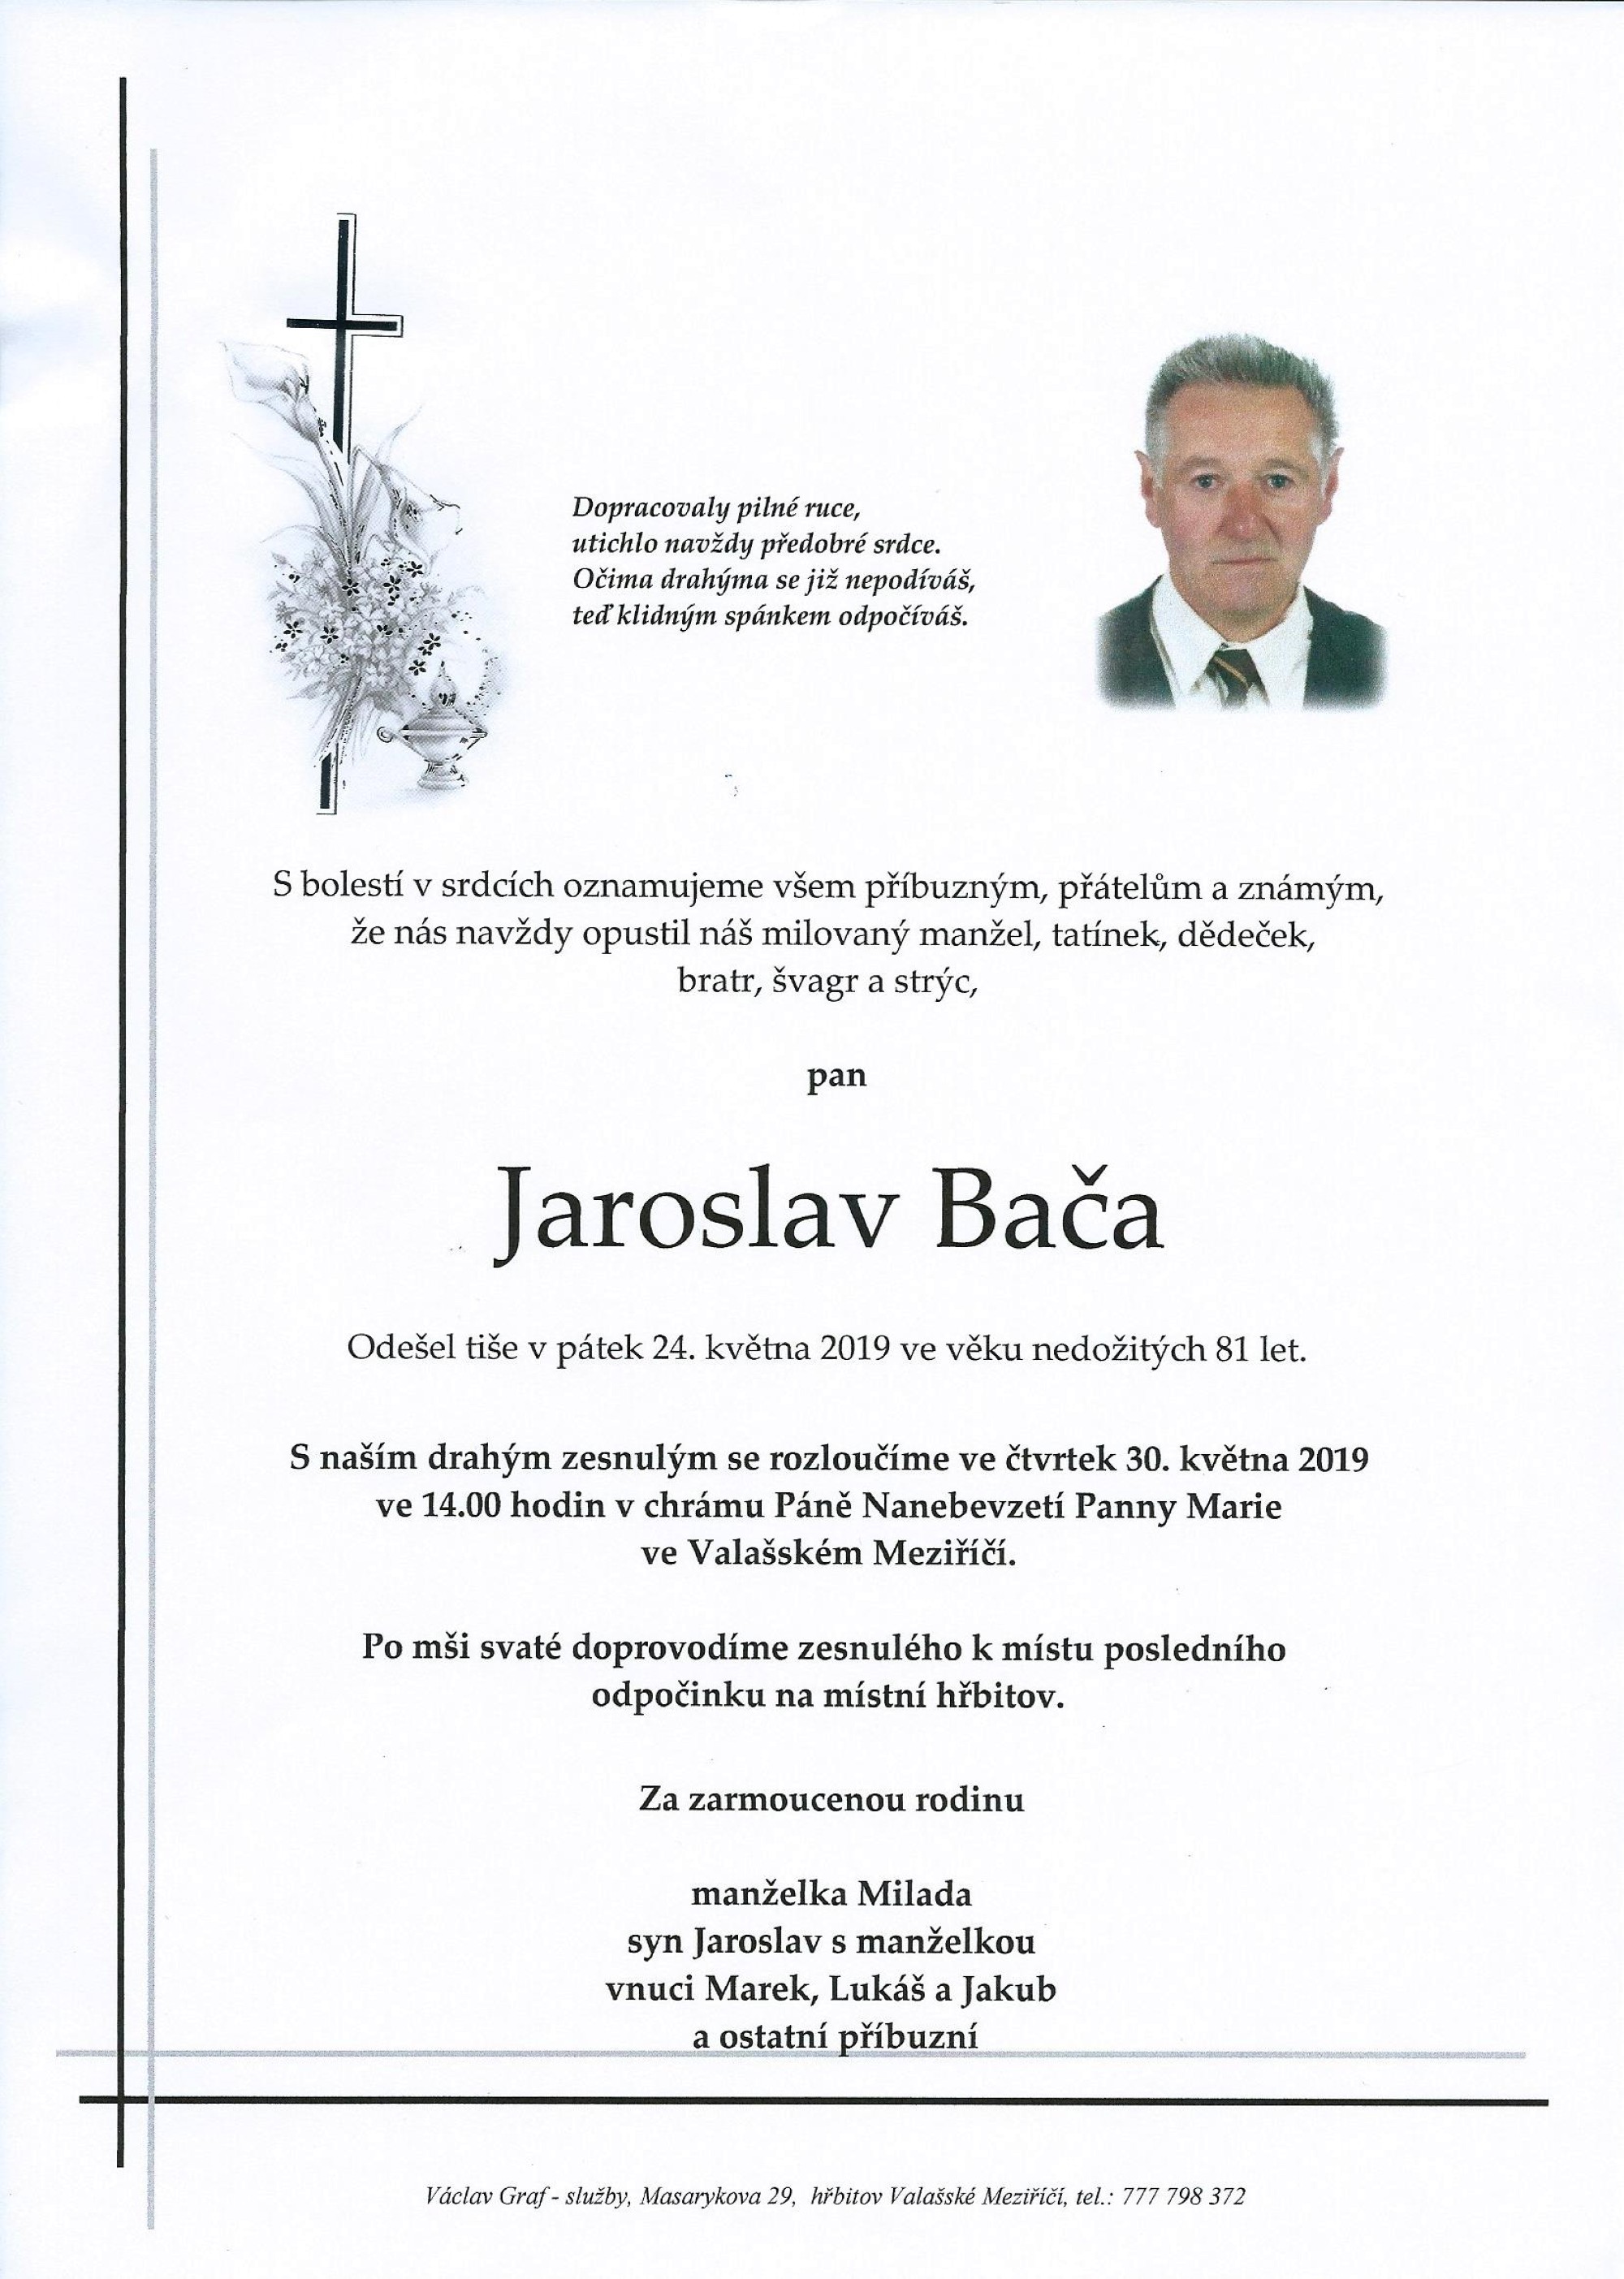 Jaroslav Bača